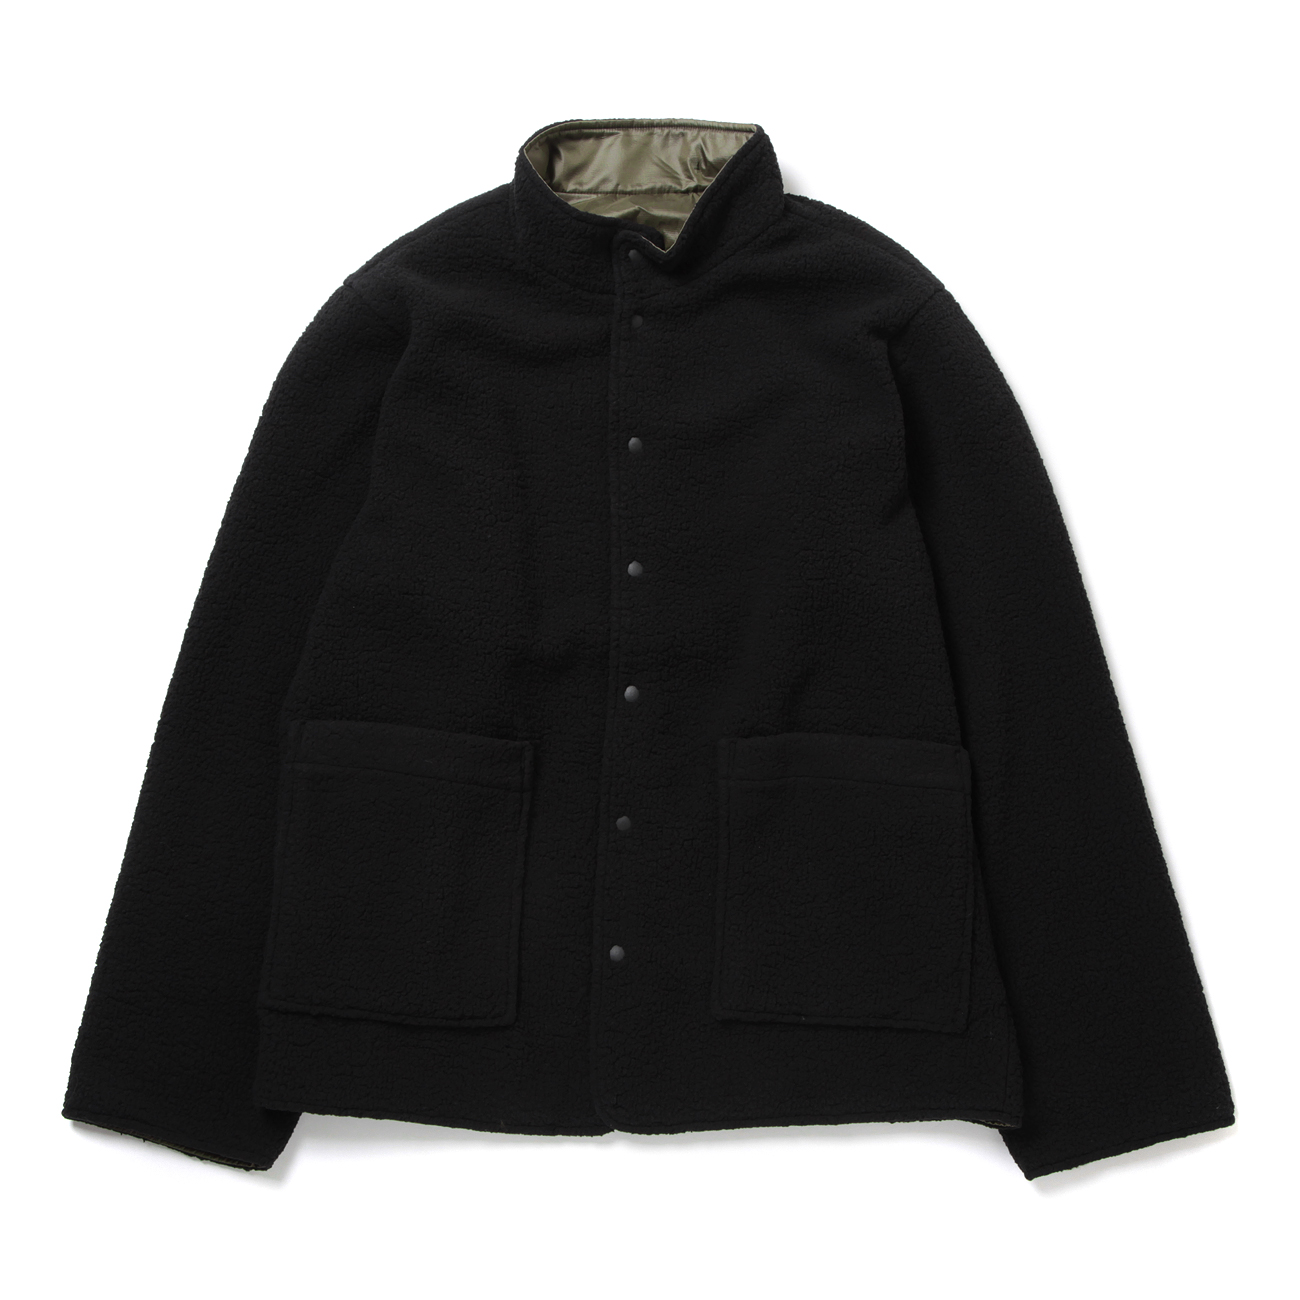 Reversible Jacket - Poly Fleece / Nylon Ripstop - Black